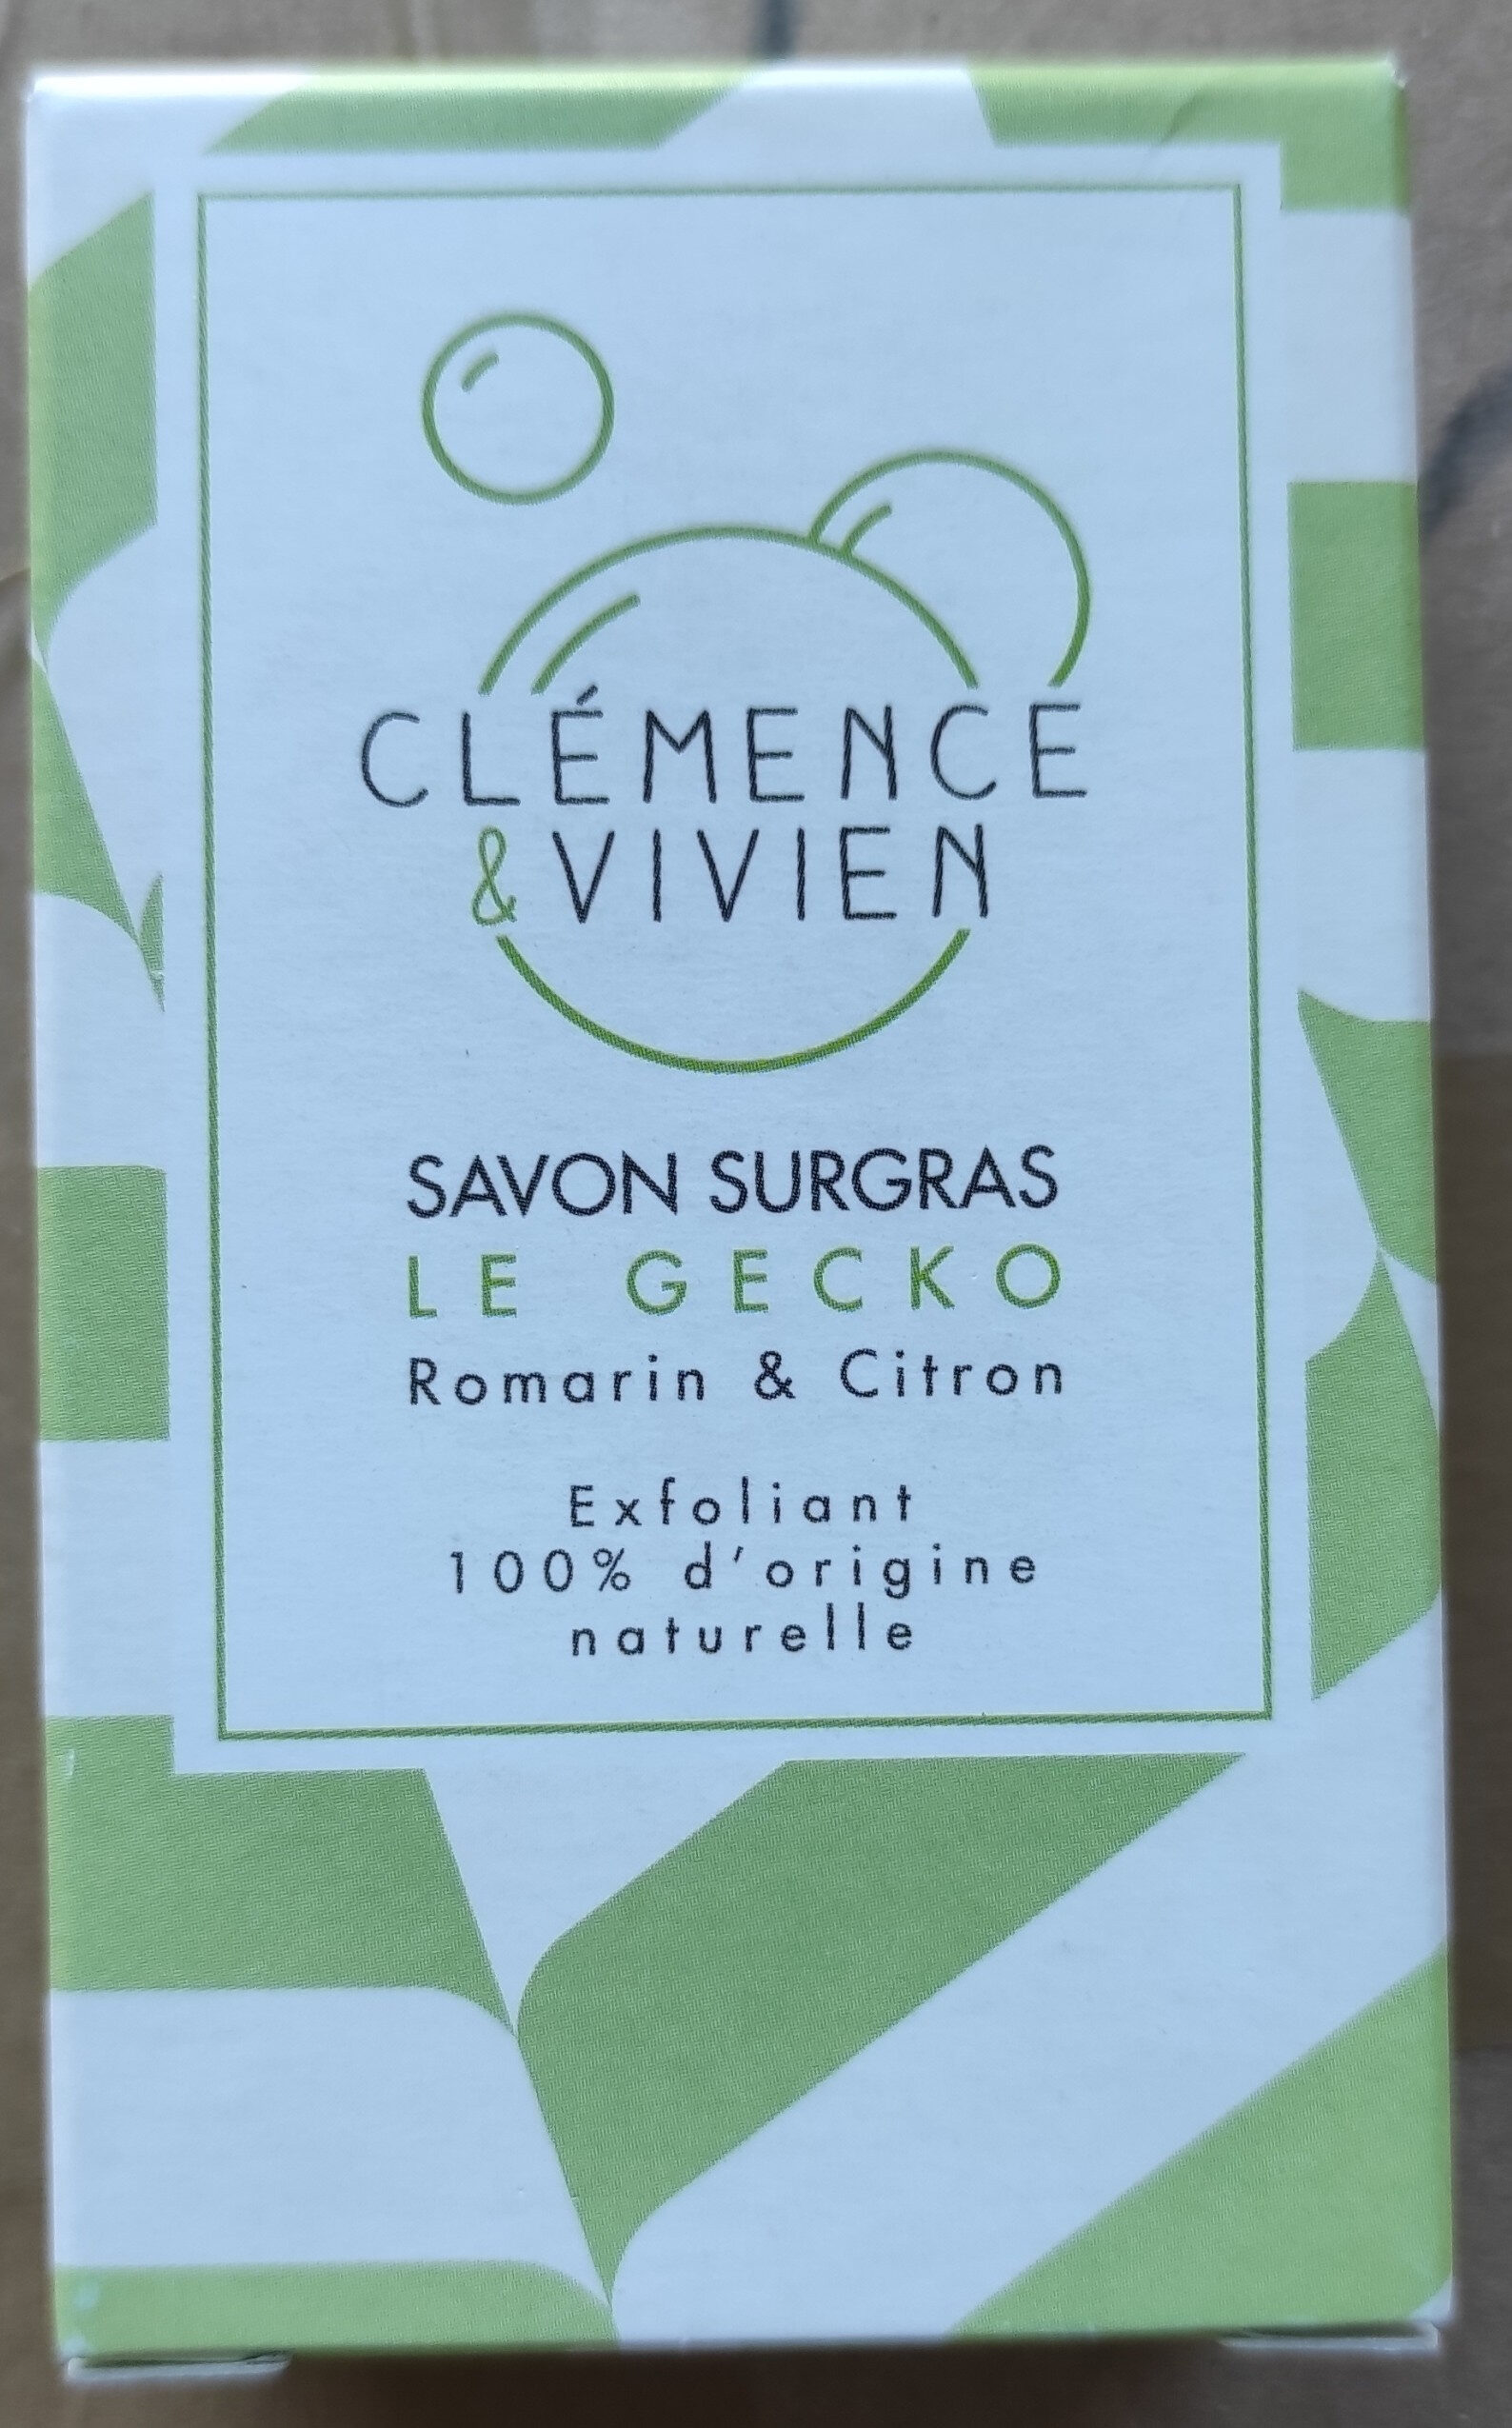 Savon surgras Le Gecko Romarin & Citron - Produit - fr